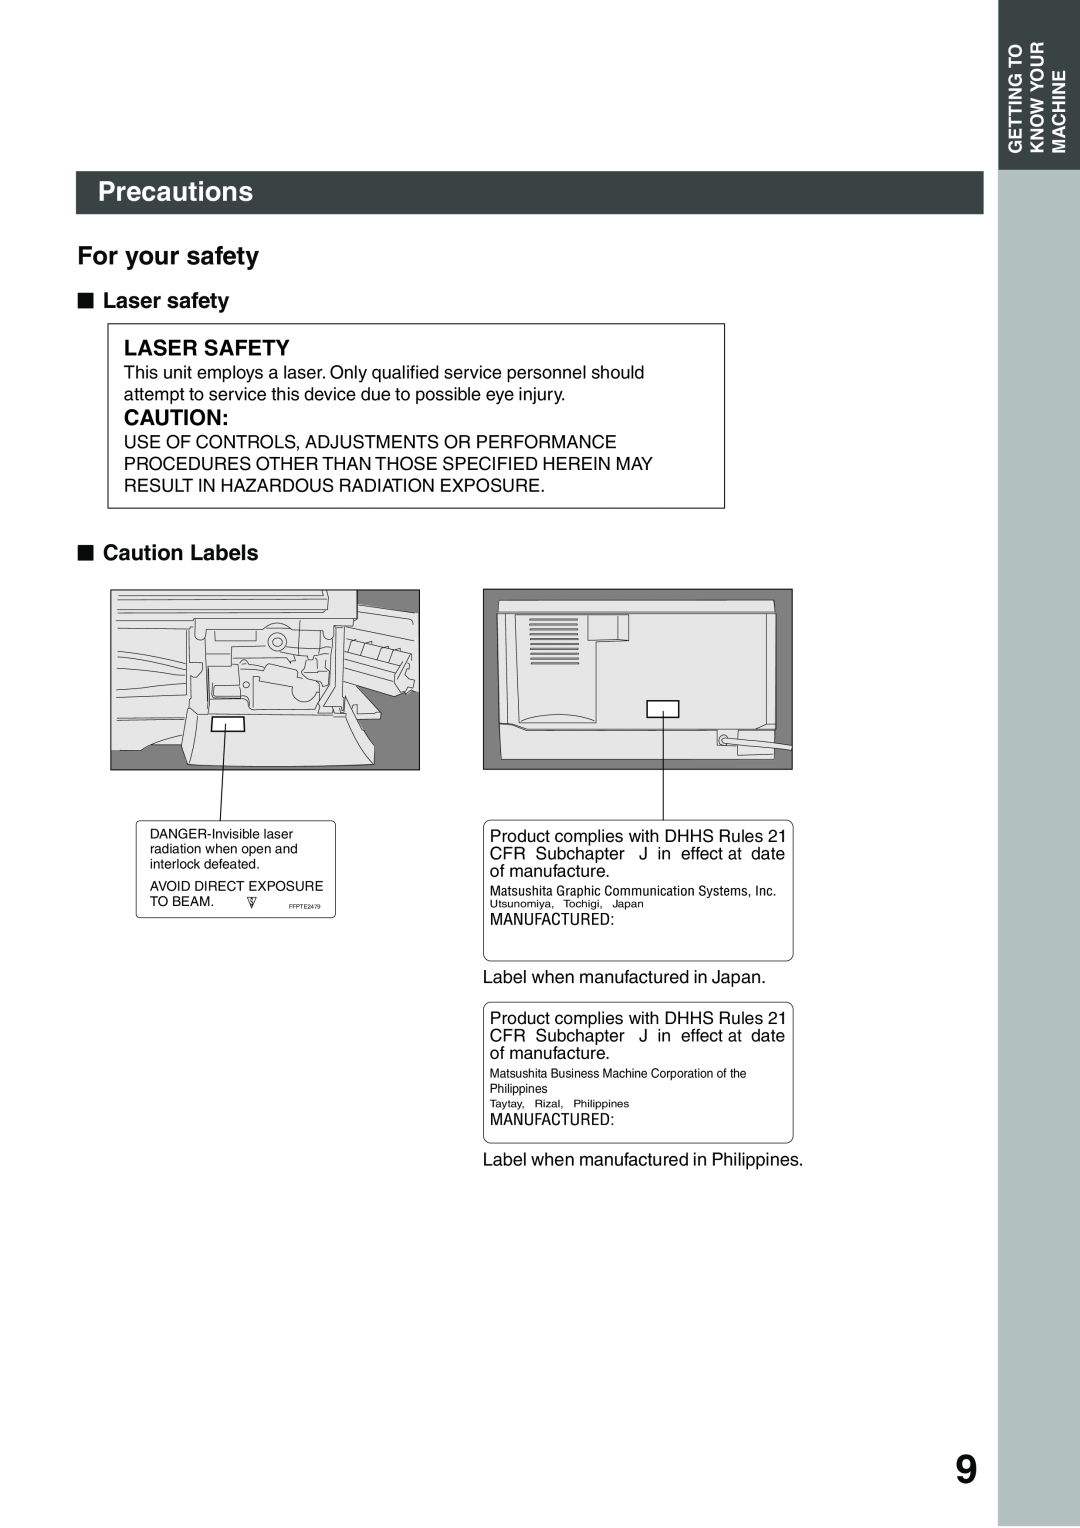 Panasonic DP-135FP appendix Precautions, For your safety, Laser safety LASER SAFETY, Caution Labels 